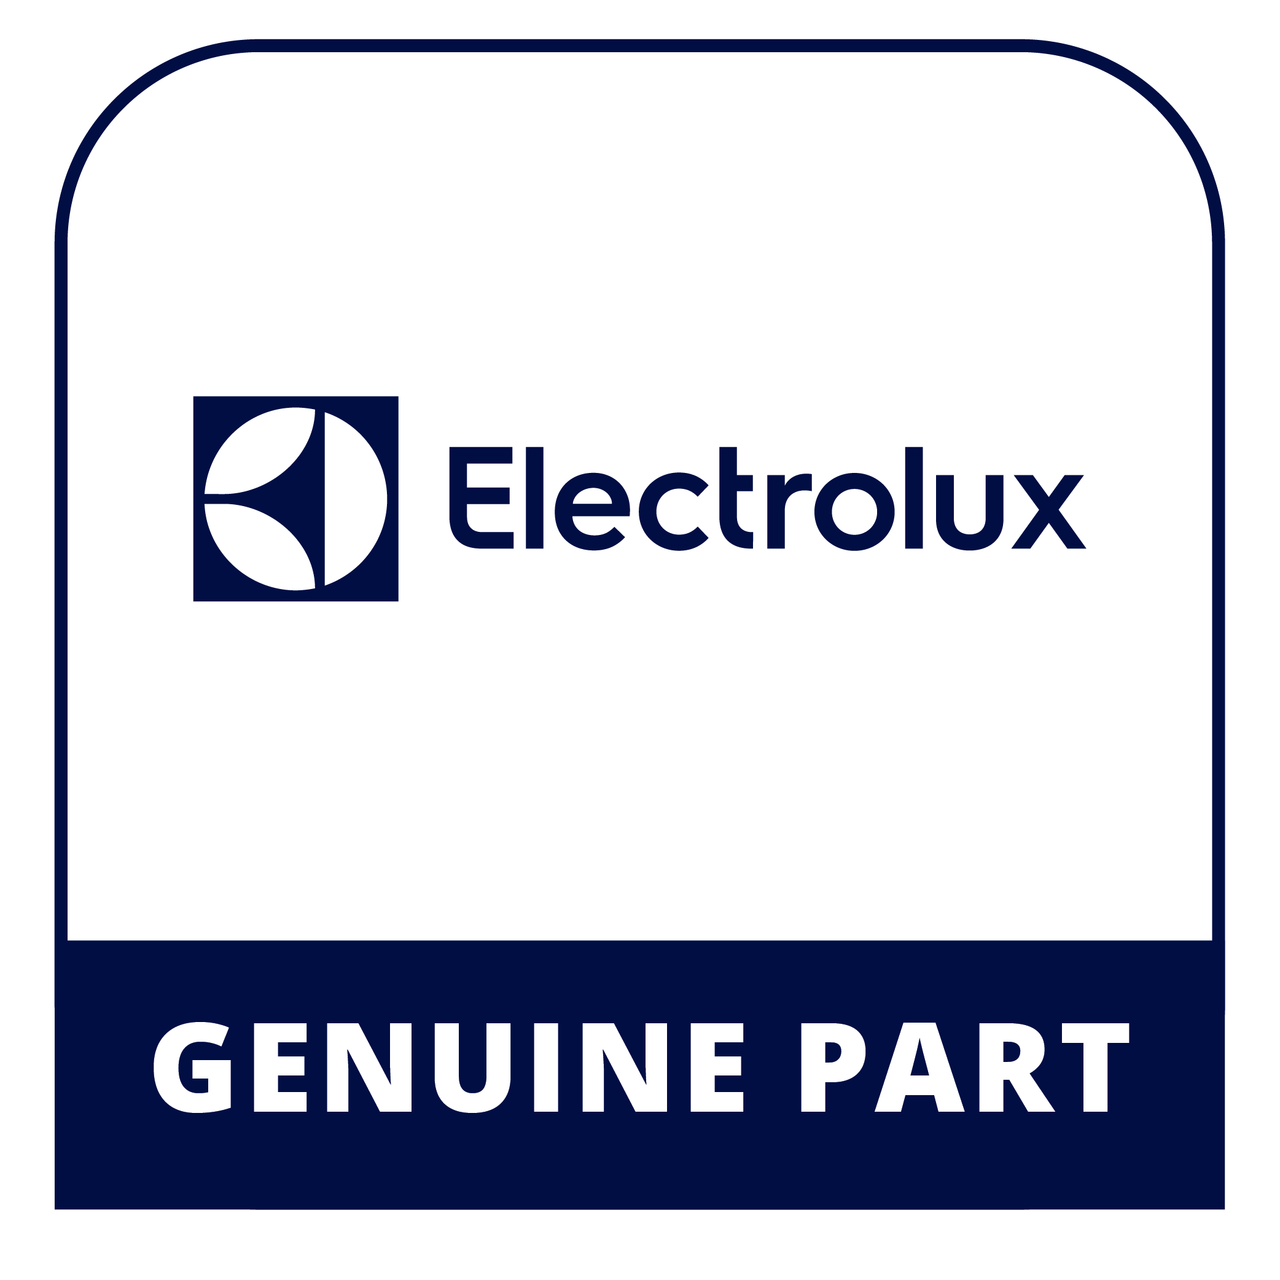 Frigidaire - Electrolux 5303918703 Control Box Kit - Genuine Electrolux Part